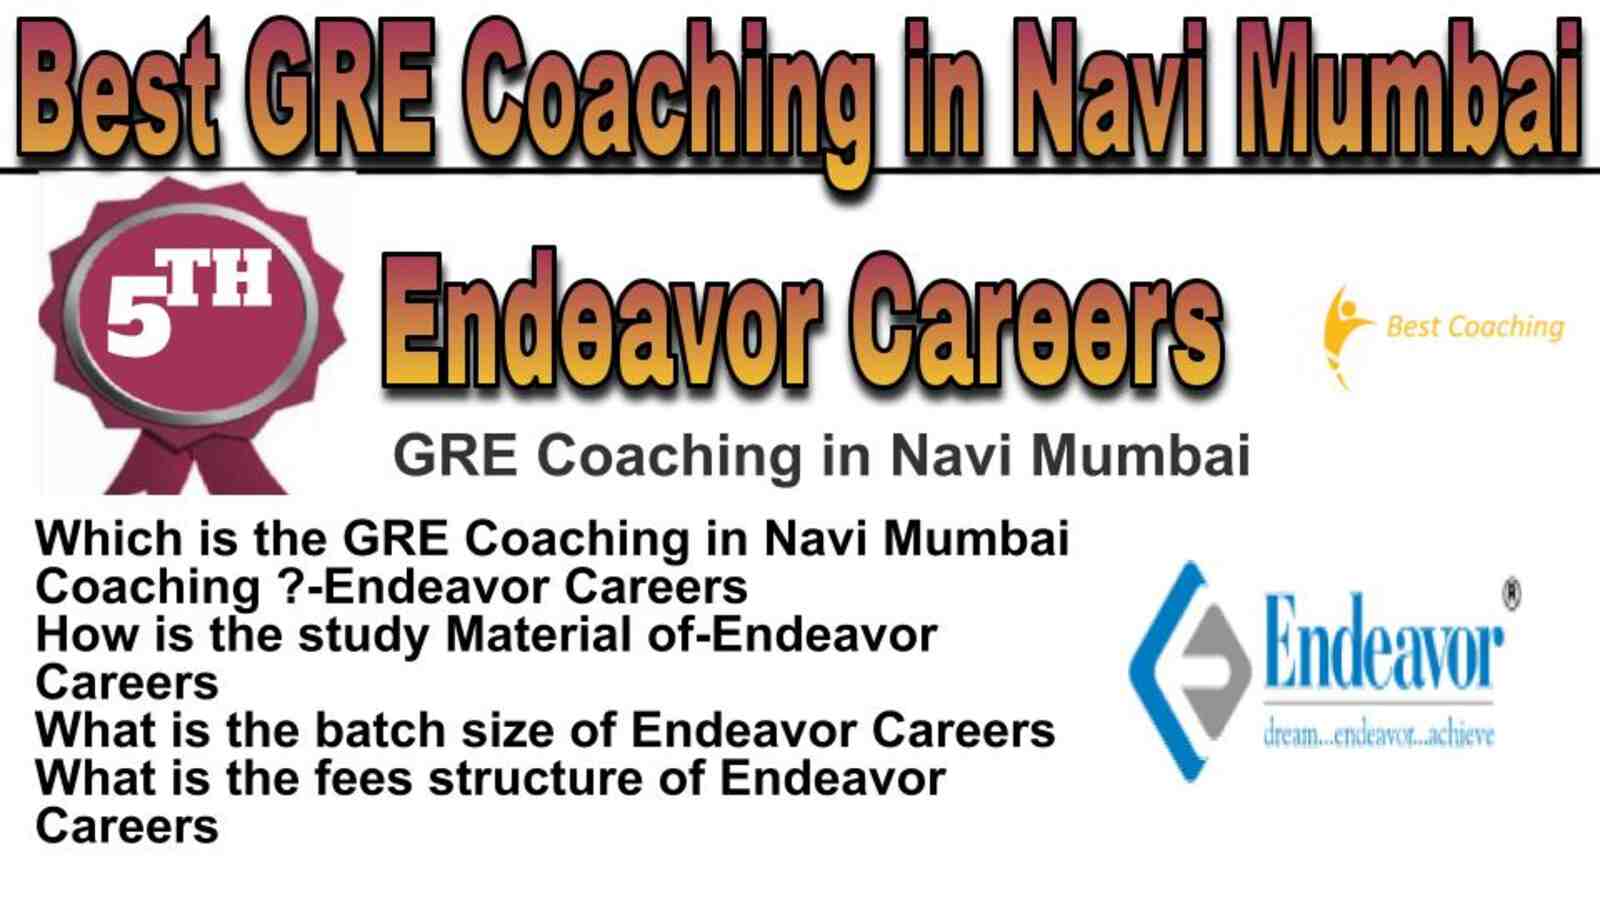 Rank 5 best GRE coaching in Navi Mumbai